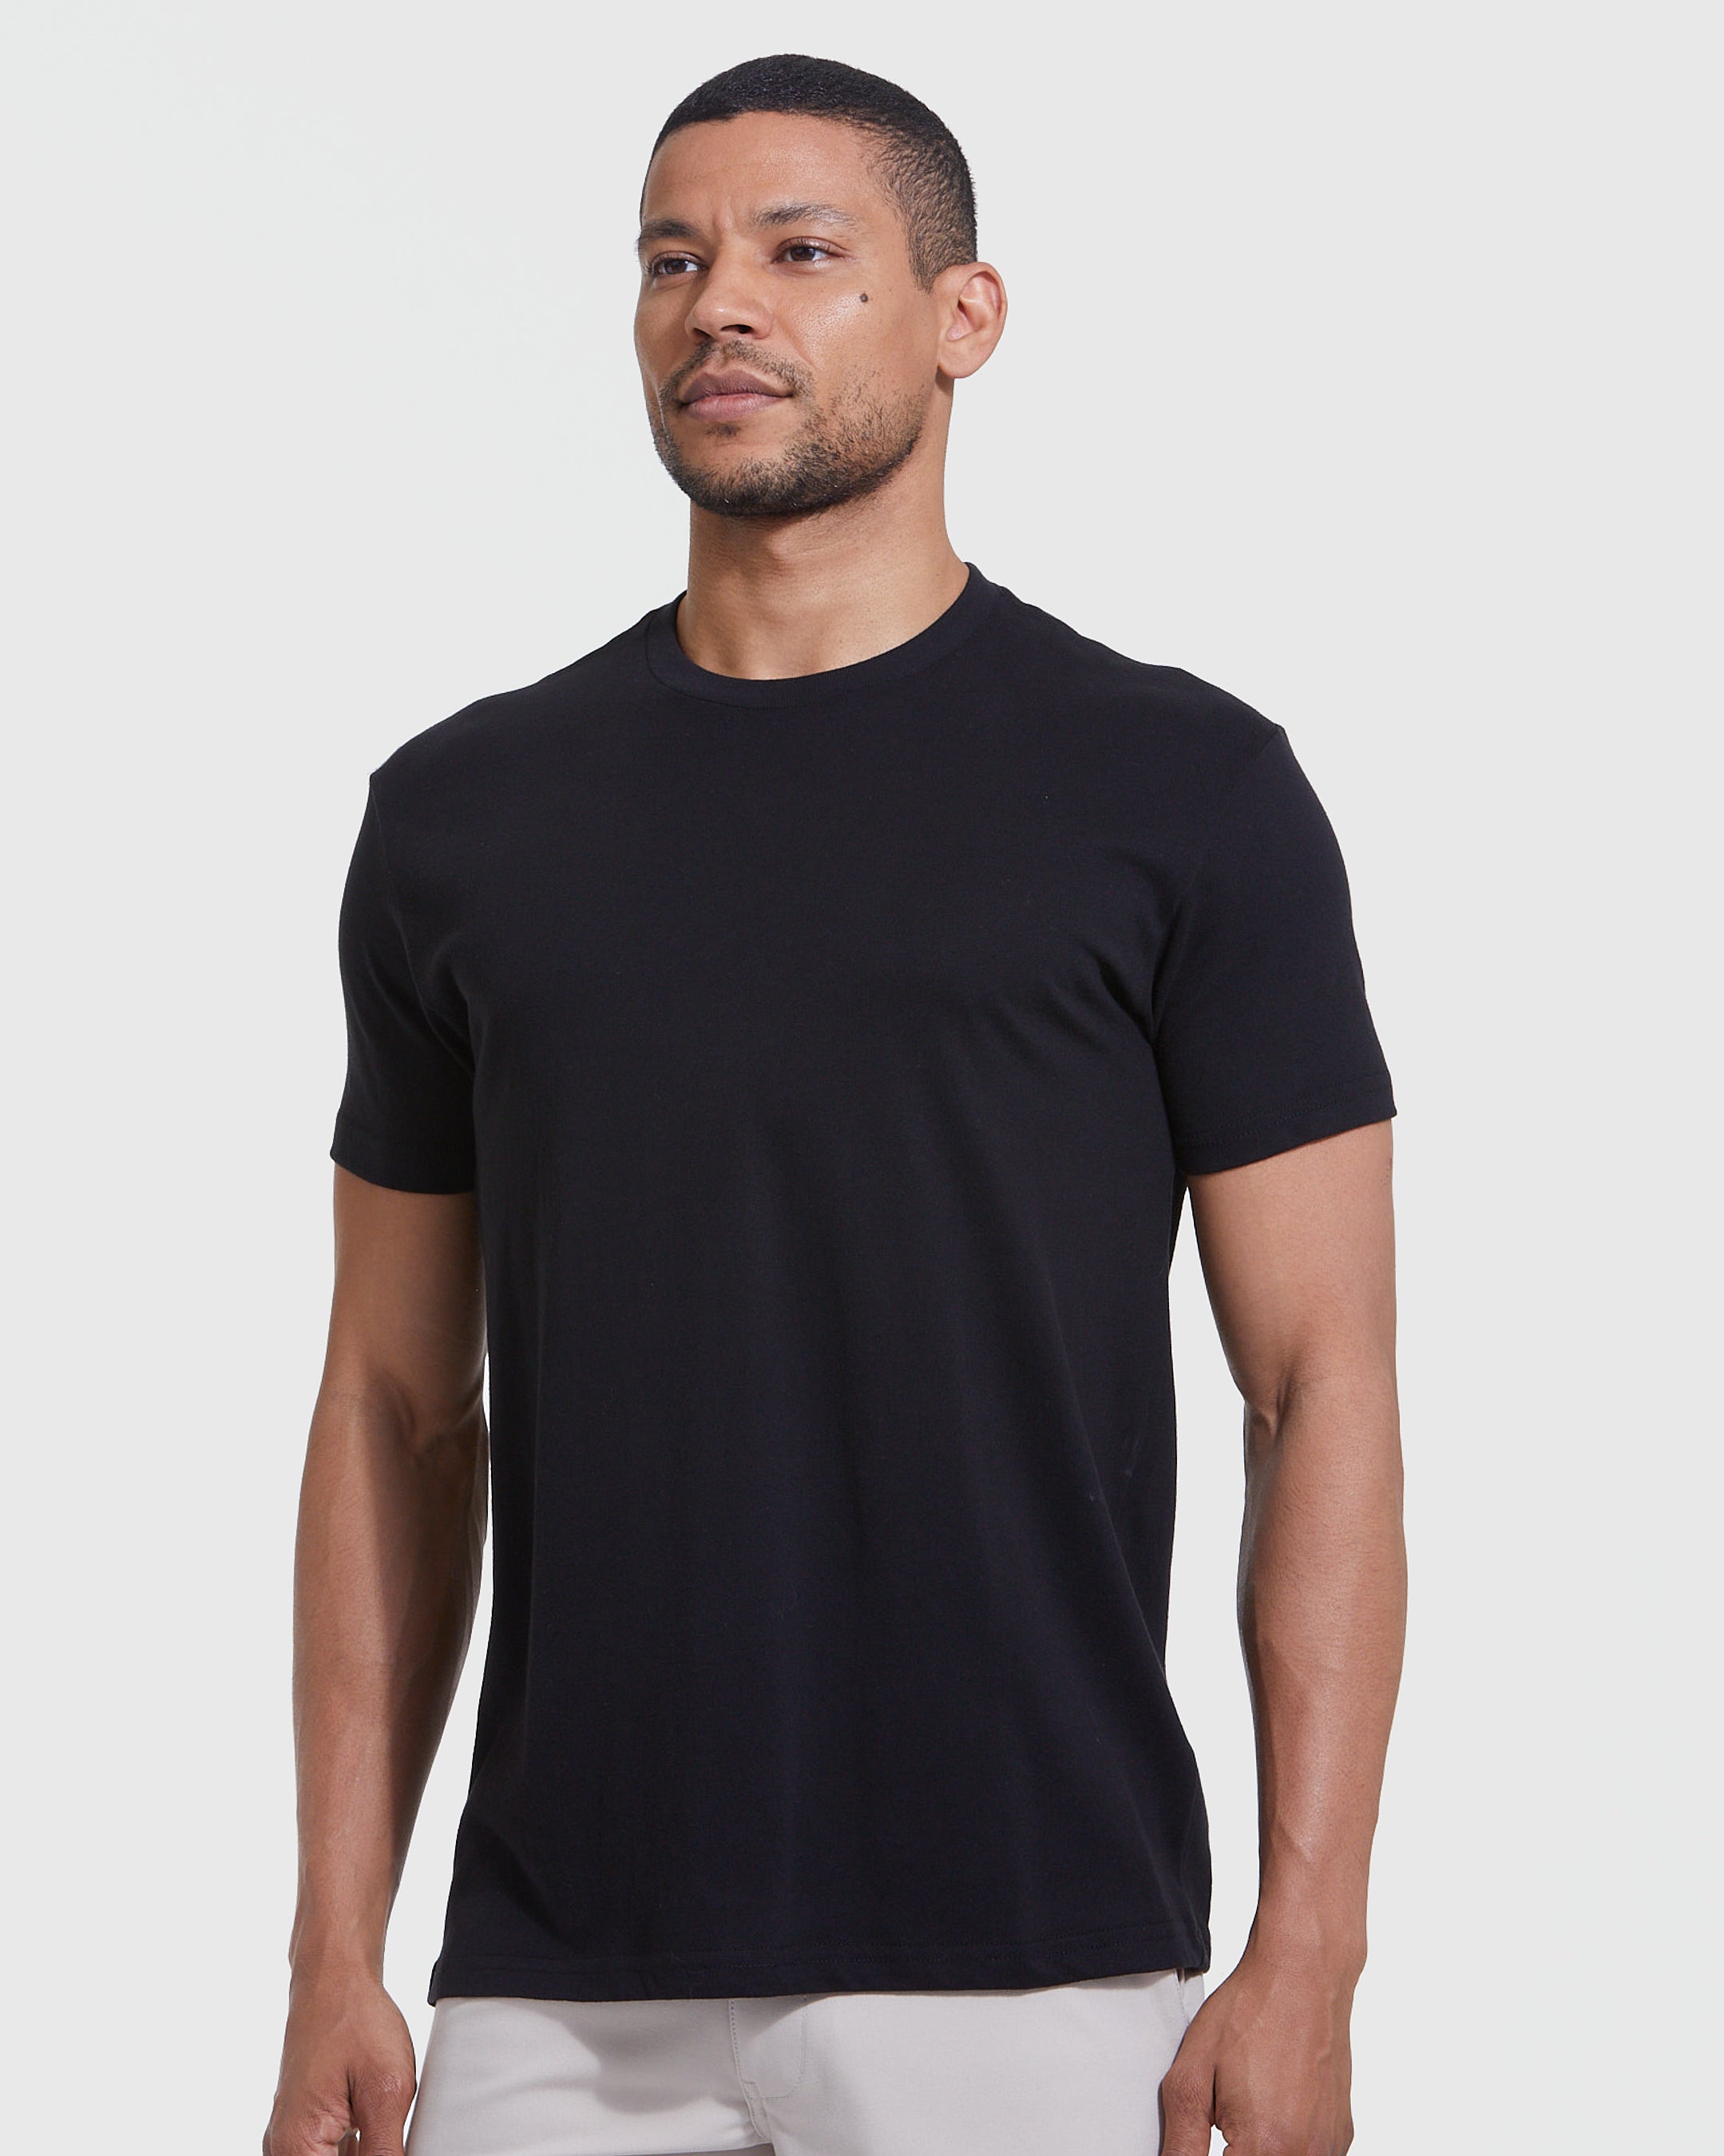 3 Pack of Black T-Shirts | Men's 3 Pack of Black Tees | True Classic